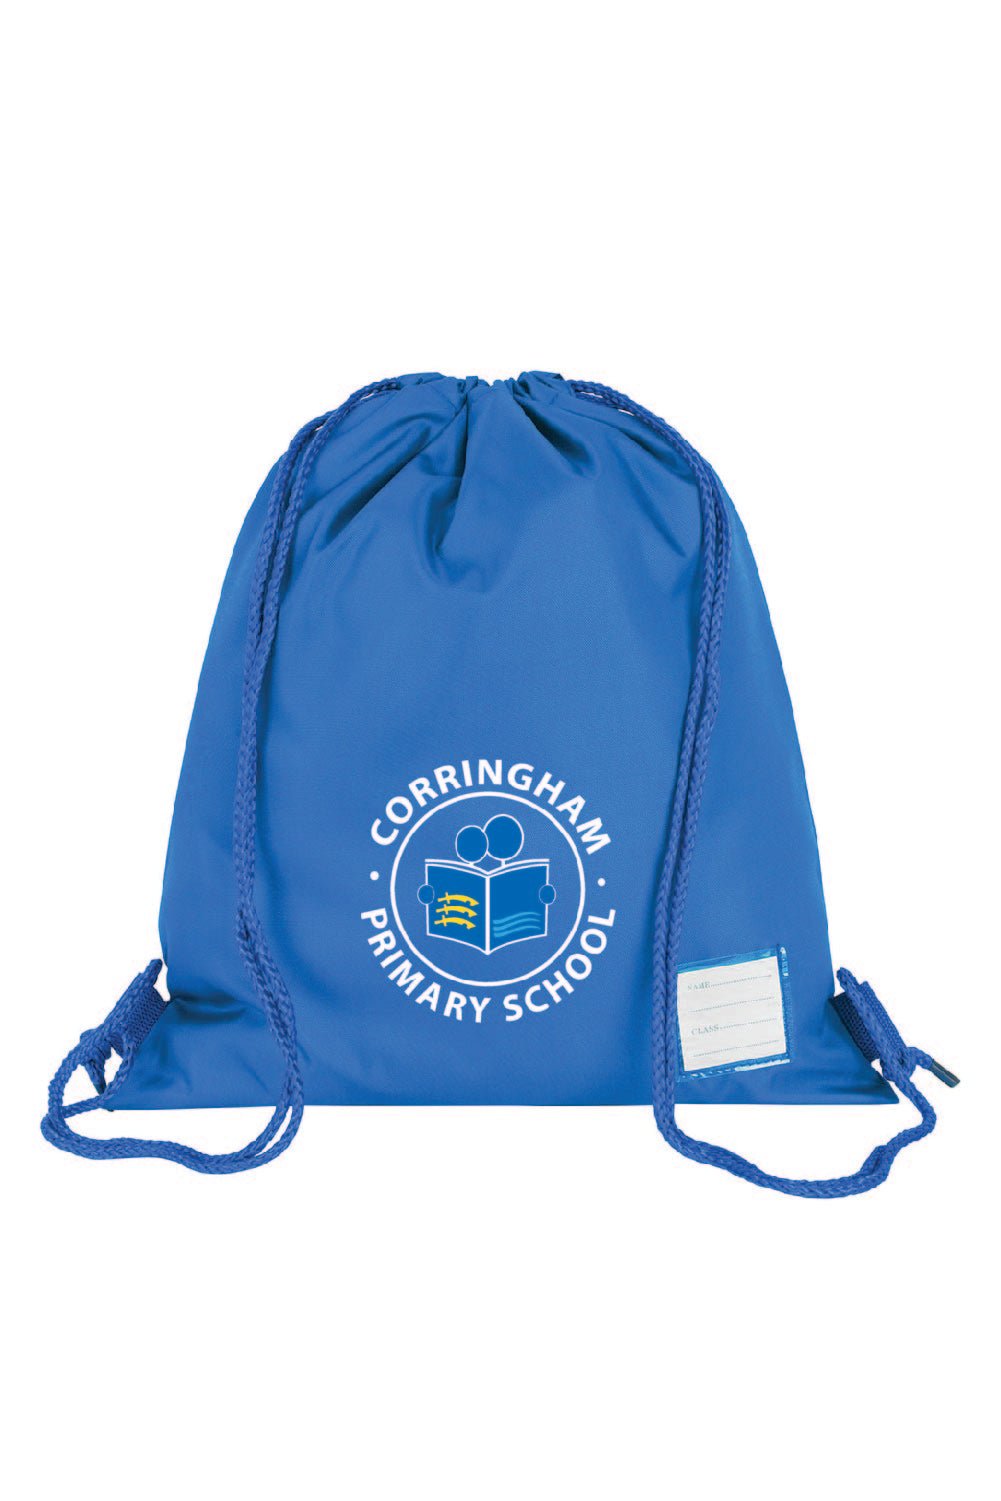 Corringham Primary PE Bag - Uniformwise Schoolwear